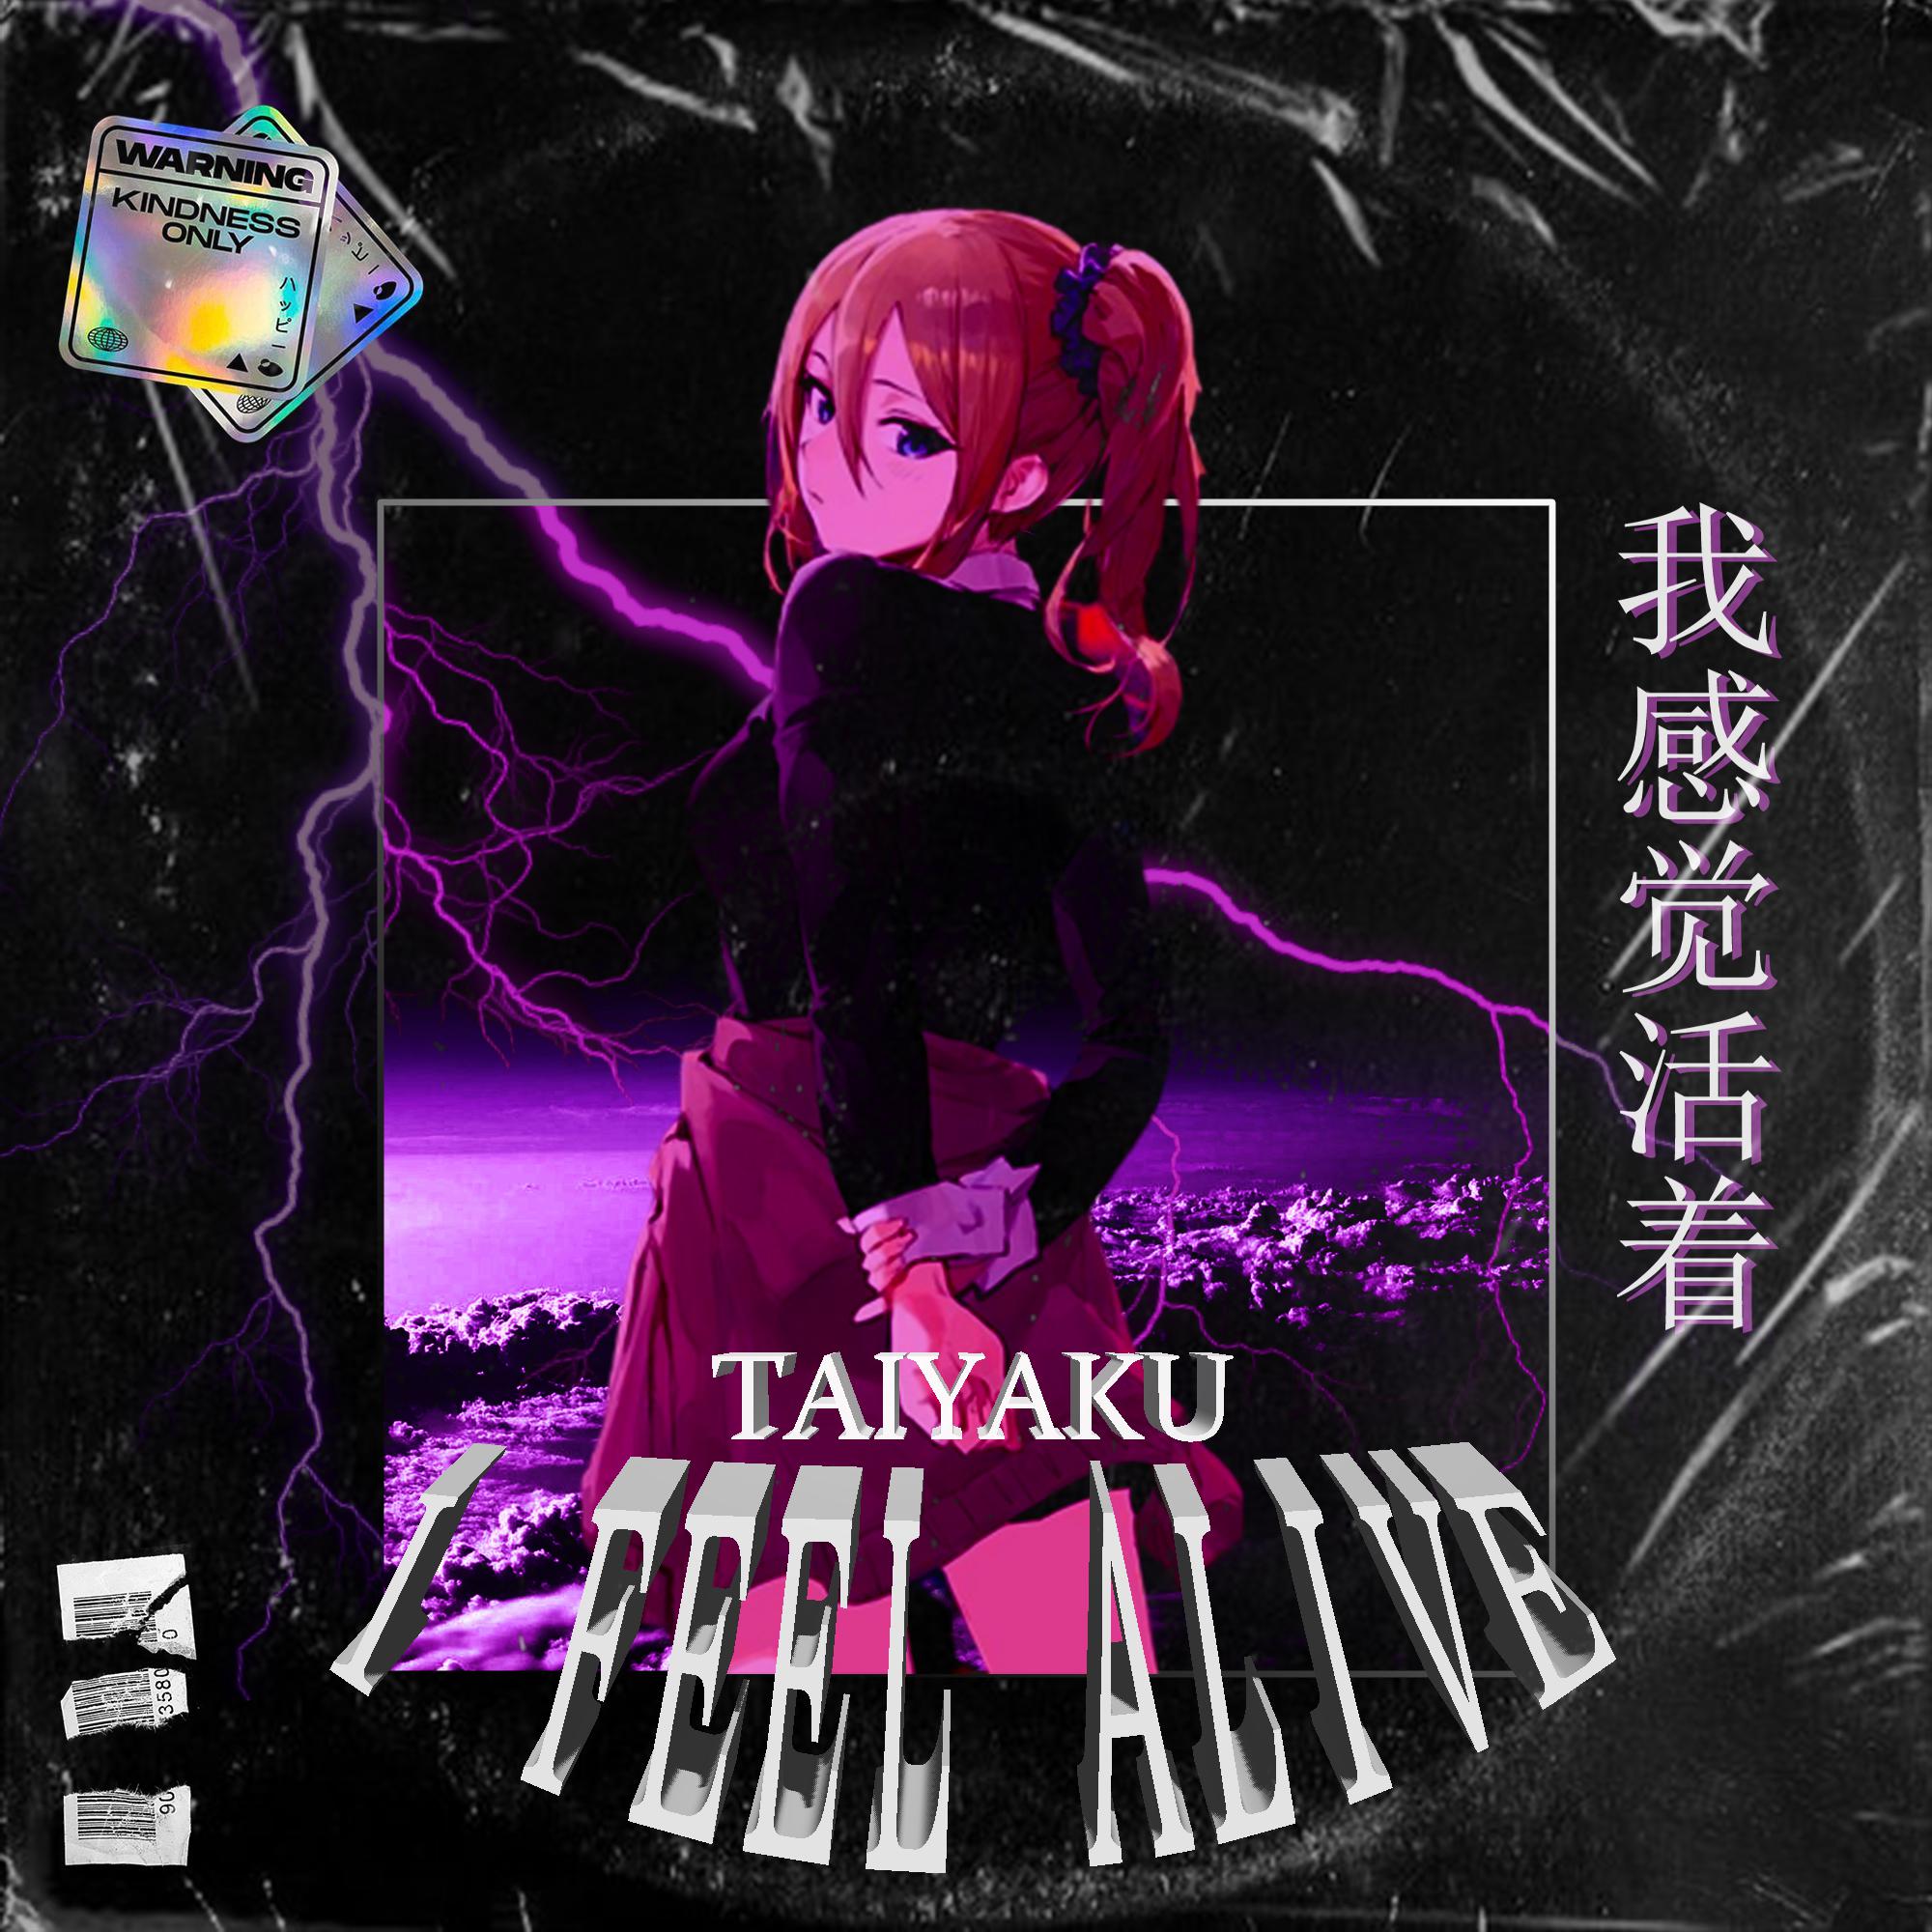 TAIYAKU - I FEEL ALIVE (Sped Up)